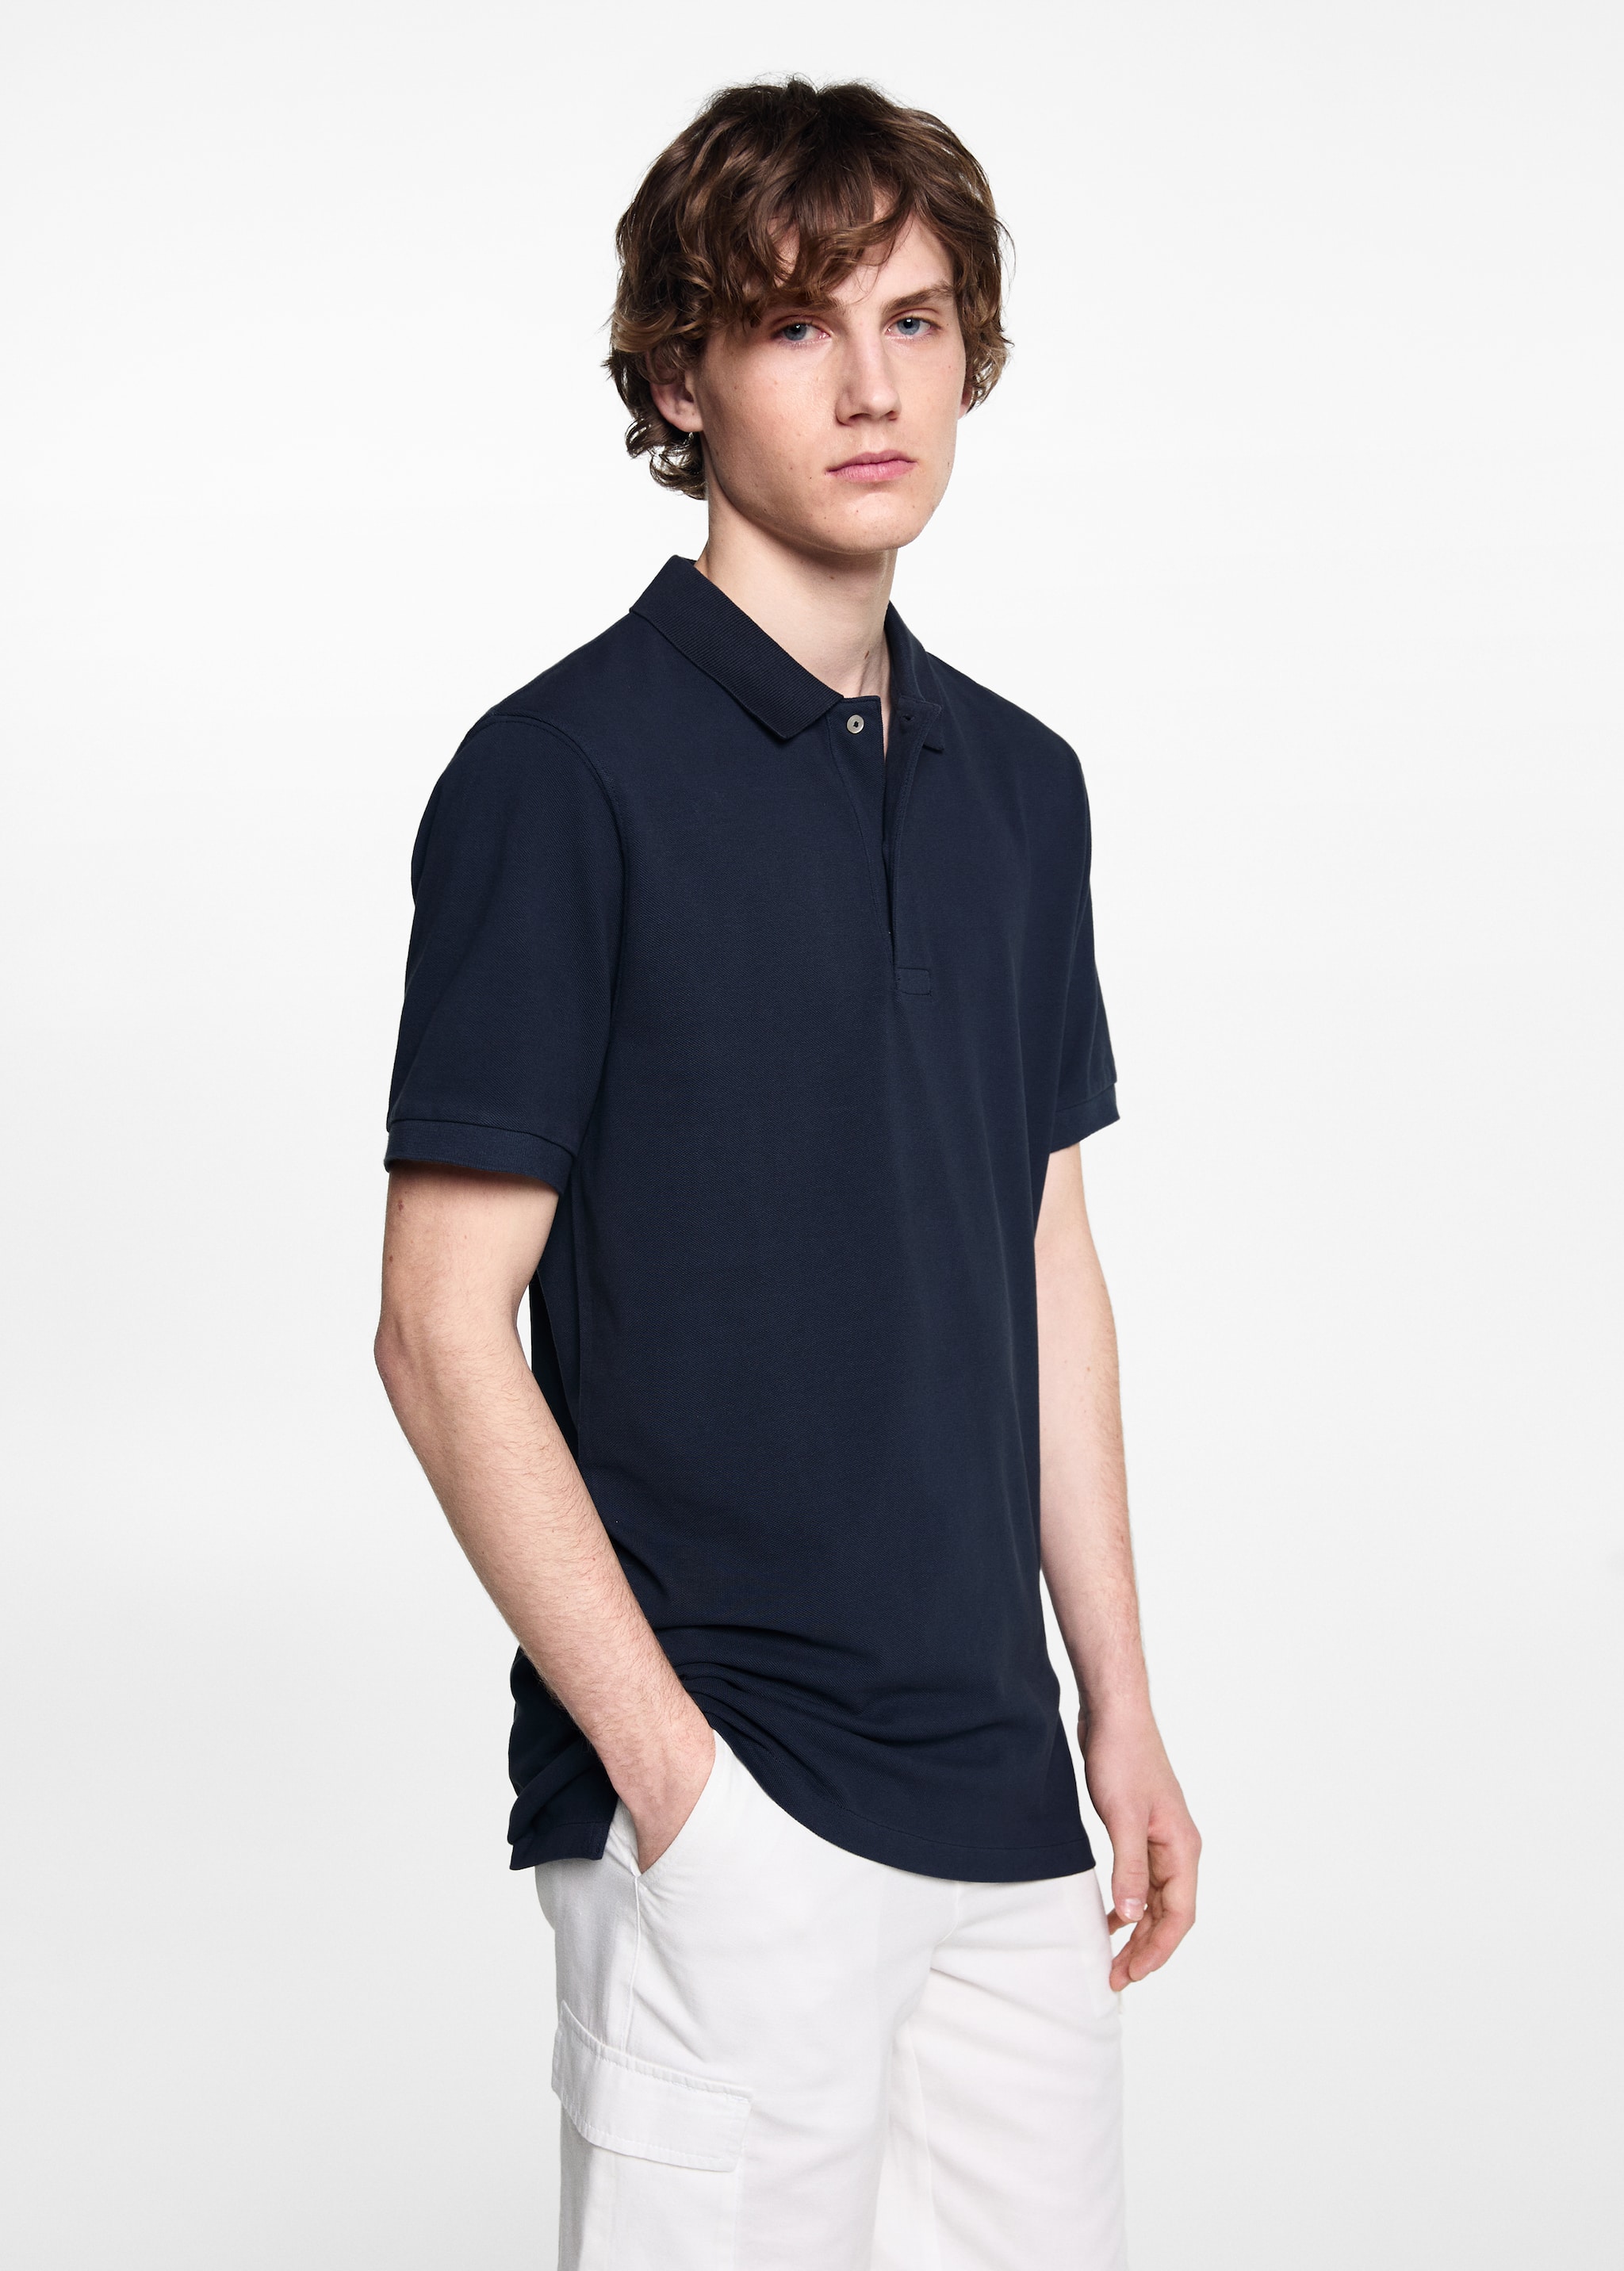 Short-sleeved cotton polo shirt - Medium plane